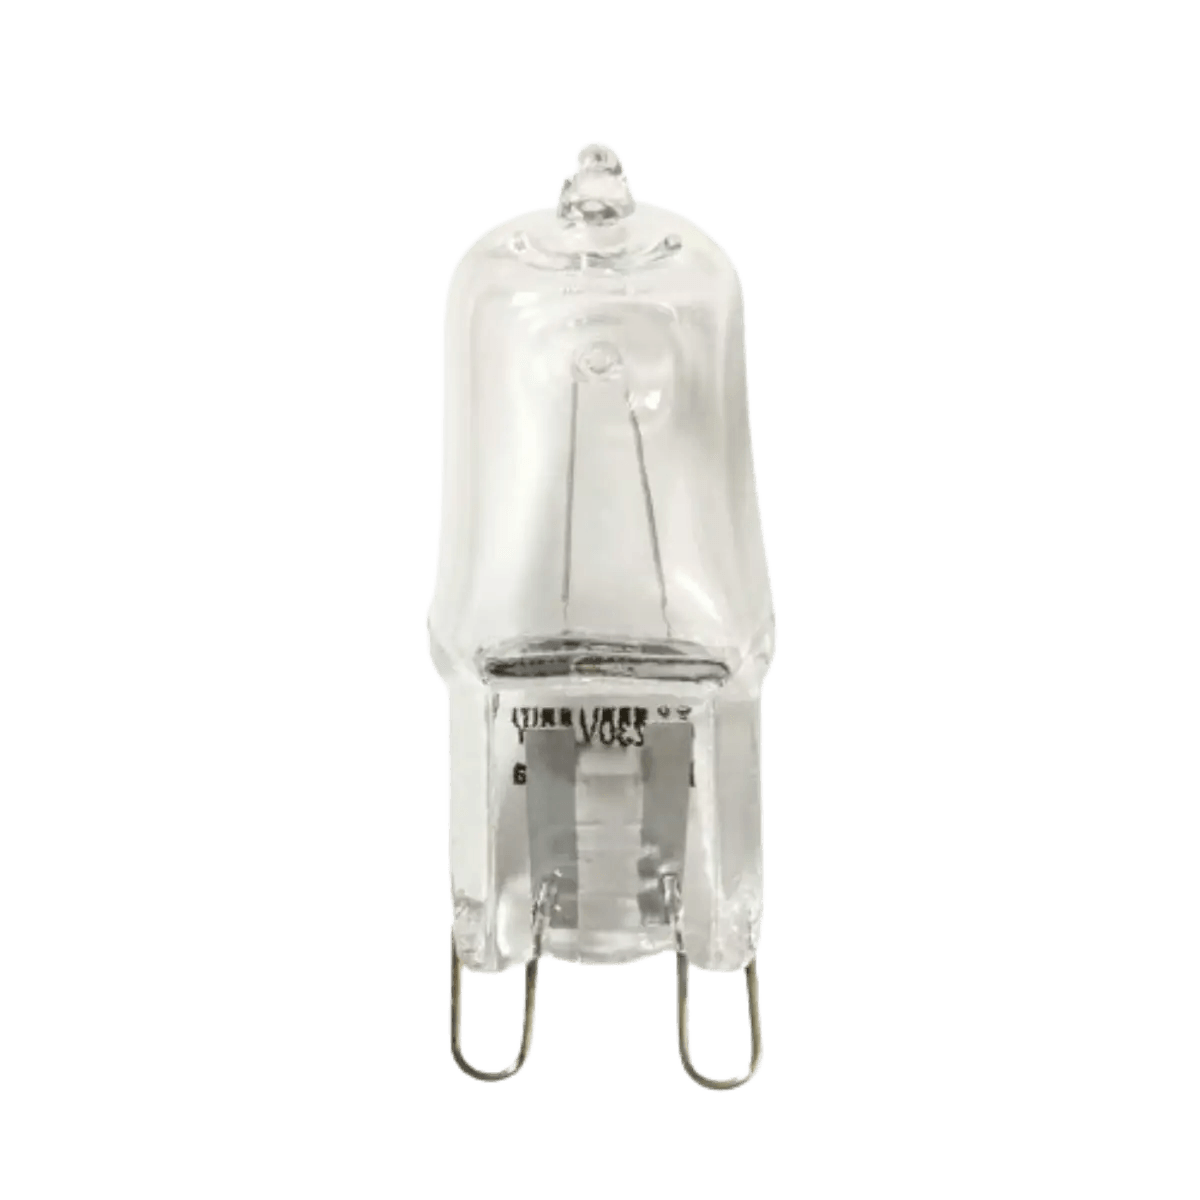 Ampoule G9 halogène basse énergie 54W (42W) 220-240V